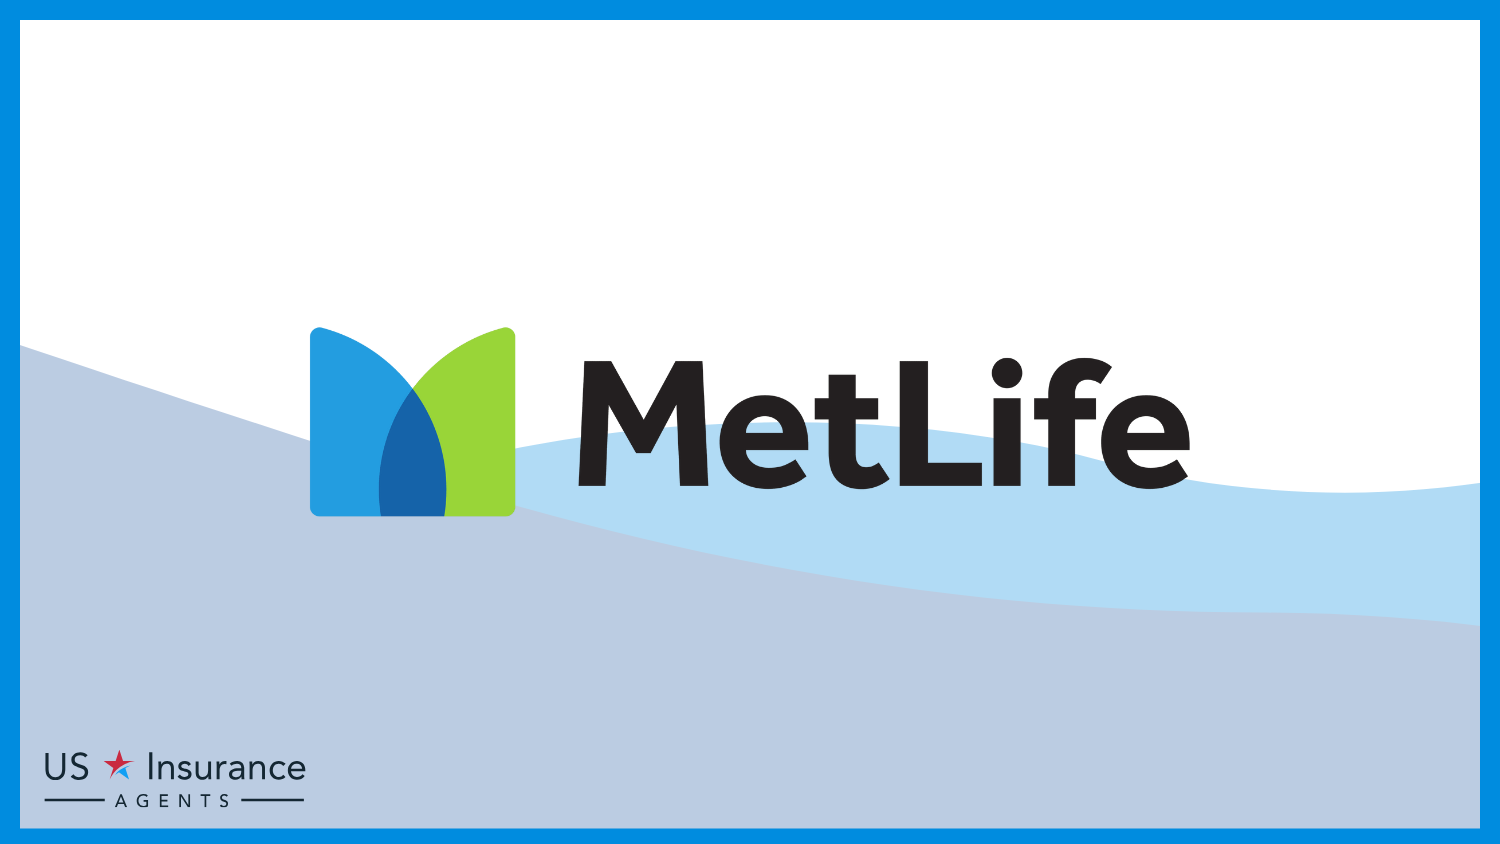 MetLife: Best Life Insurance for Nurses